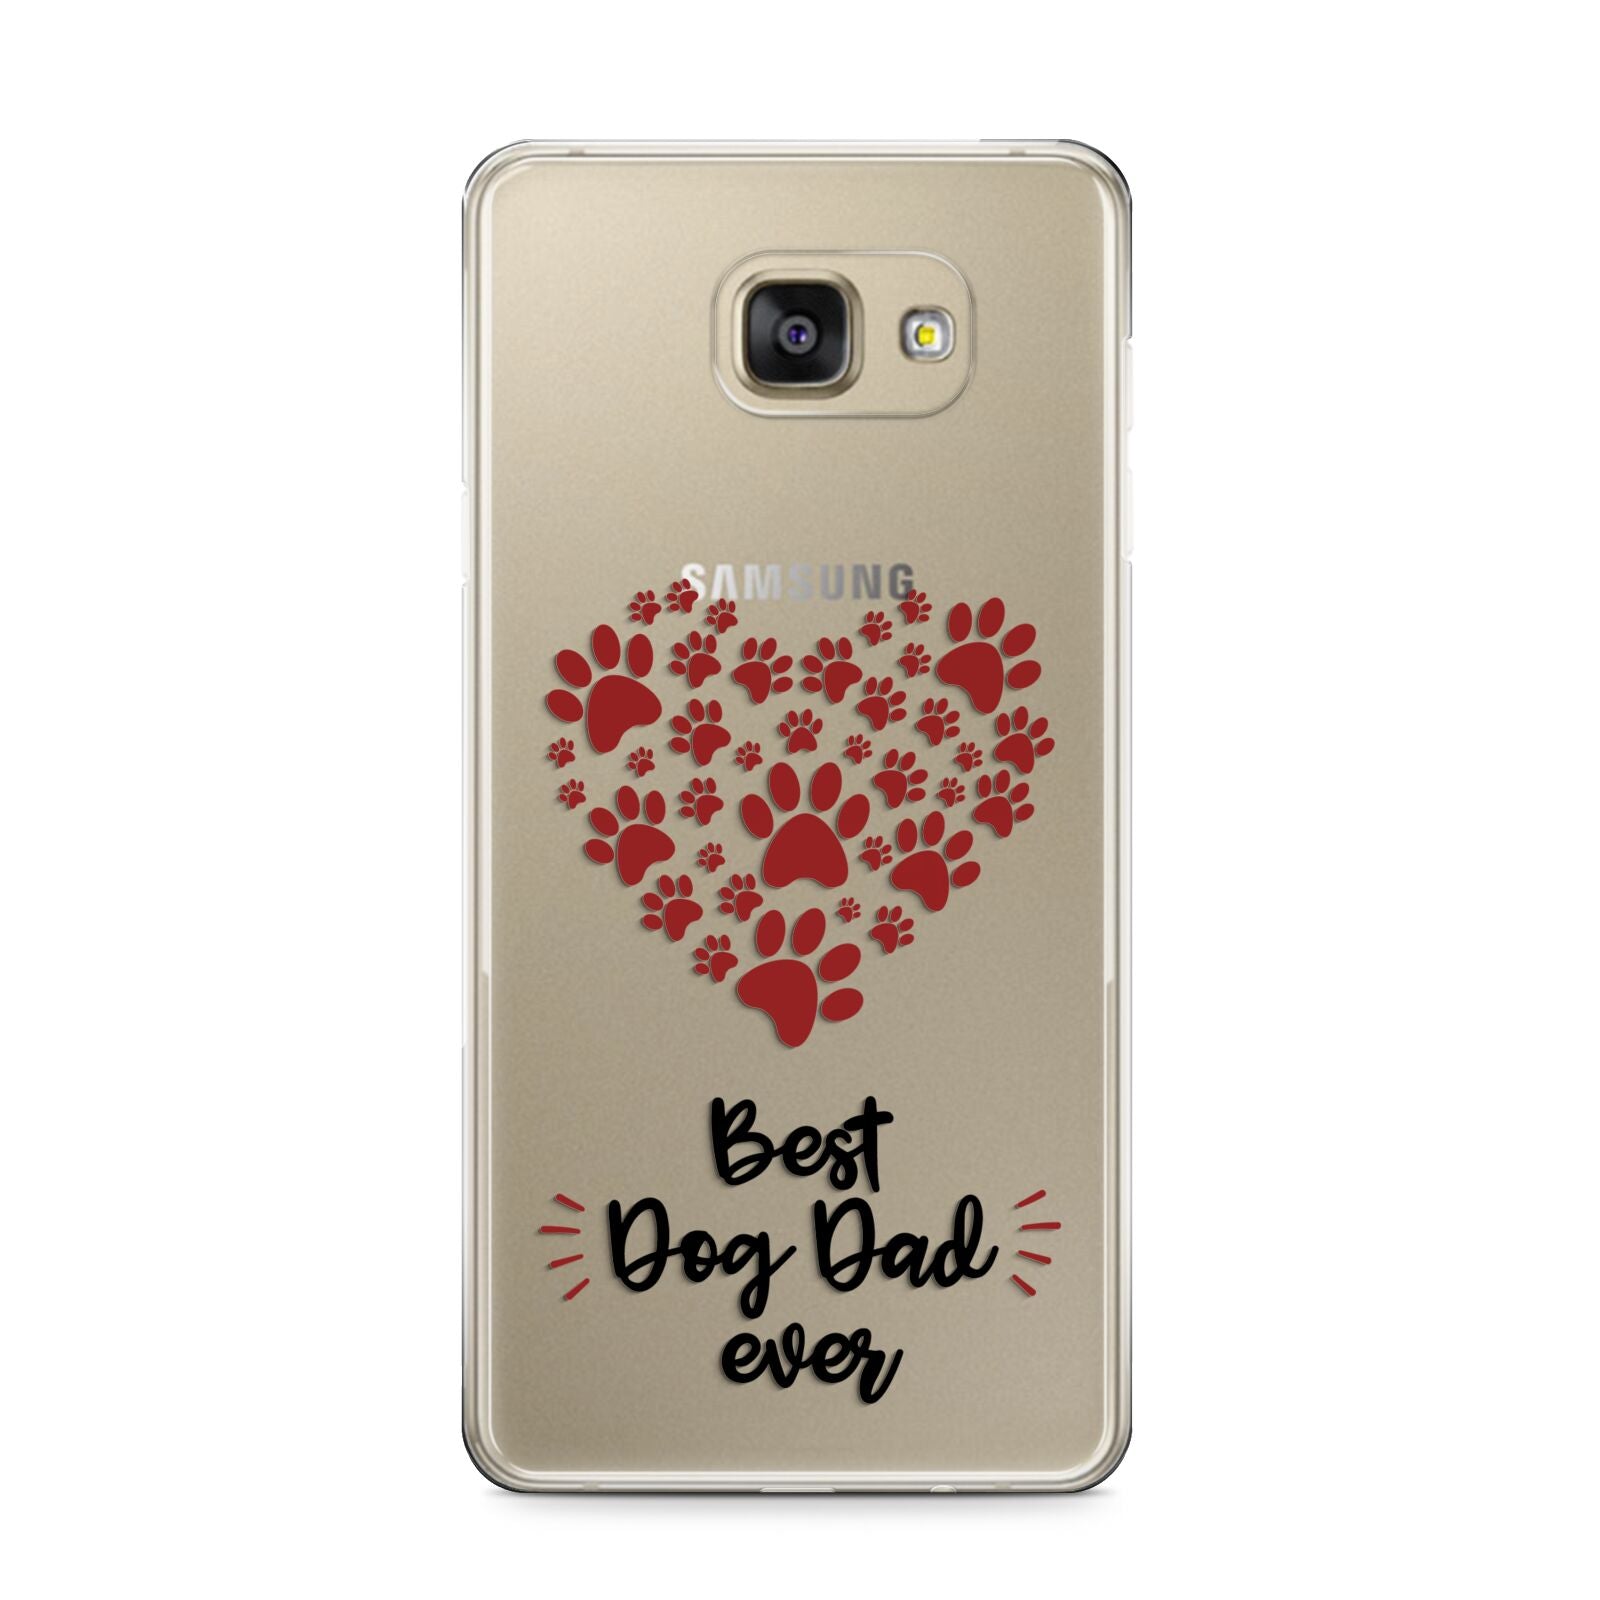 Best Dog Dad Paws Samsung Galaxy A9 2016 Case on gold phone